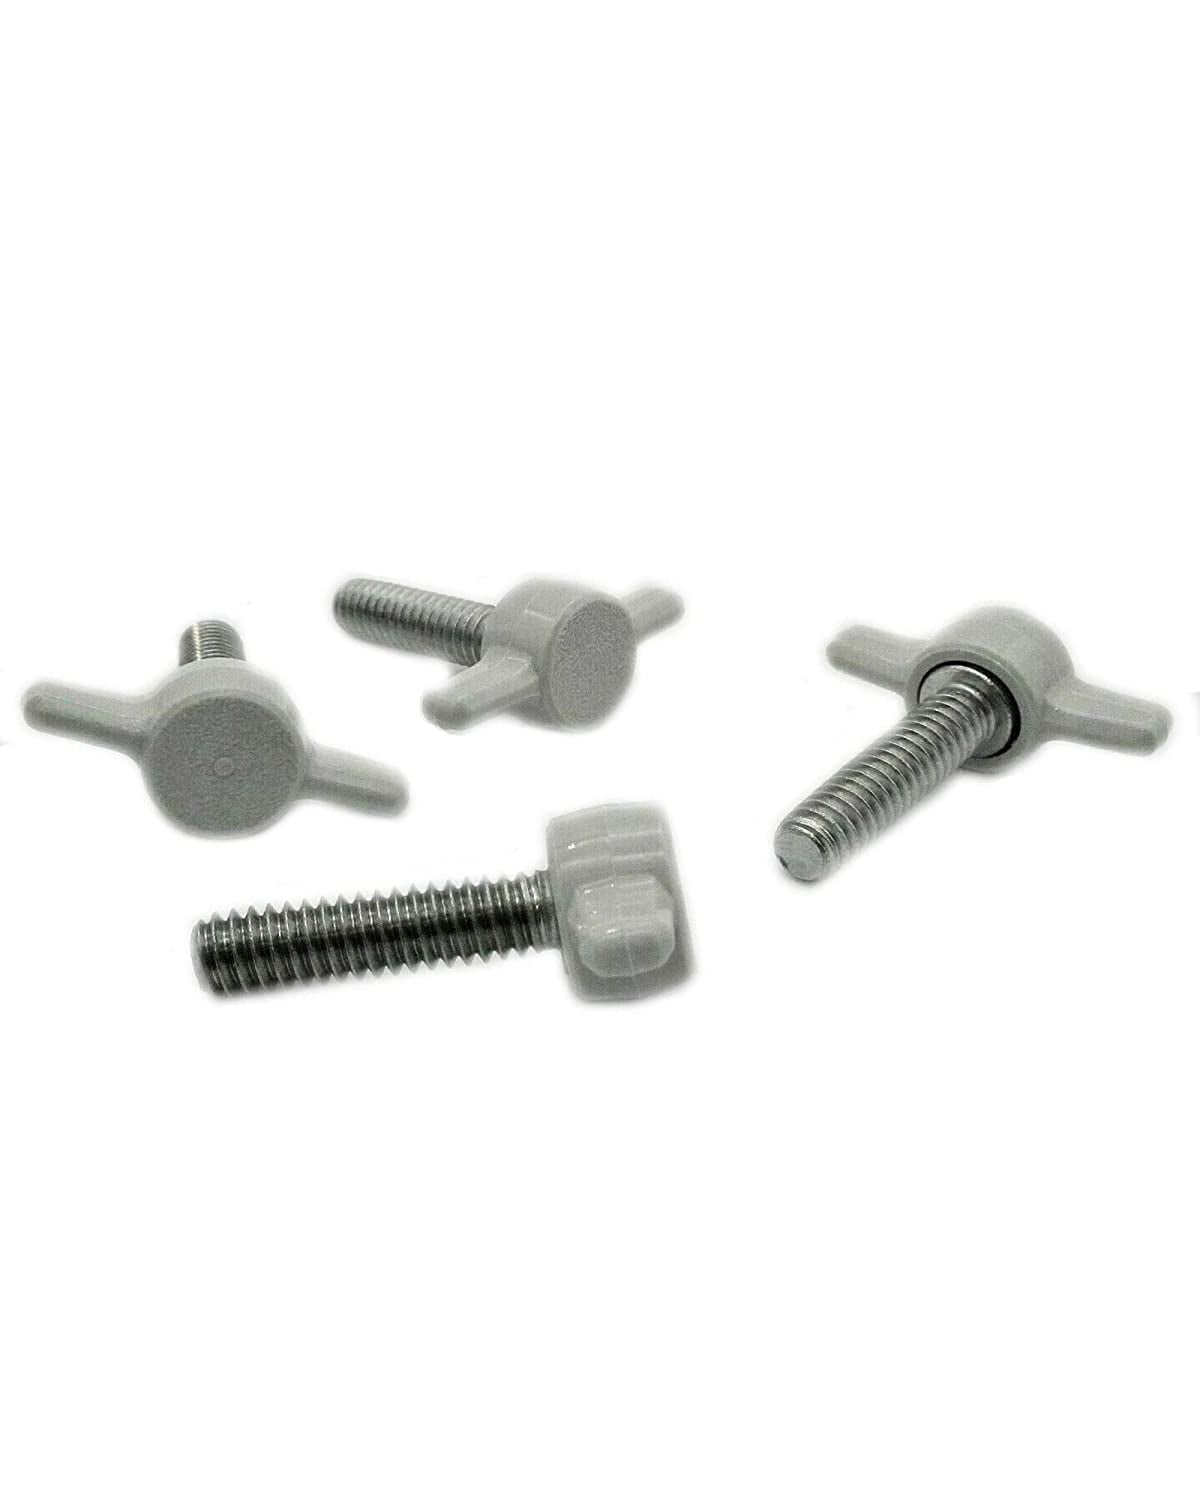 Thumb Screws Stainless Steel 1/4"-20 x 1/2" Length 1”Black Plastic Knobs 20 